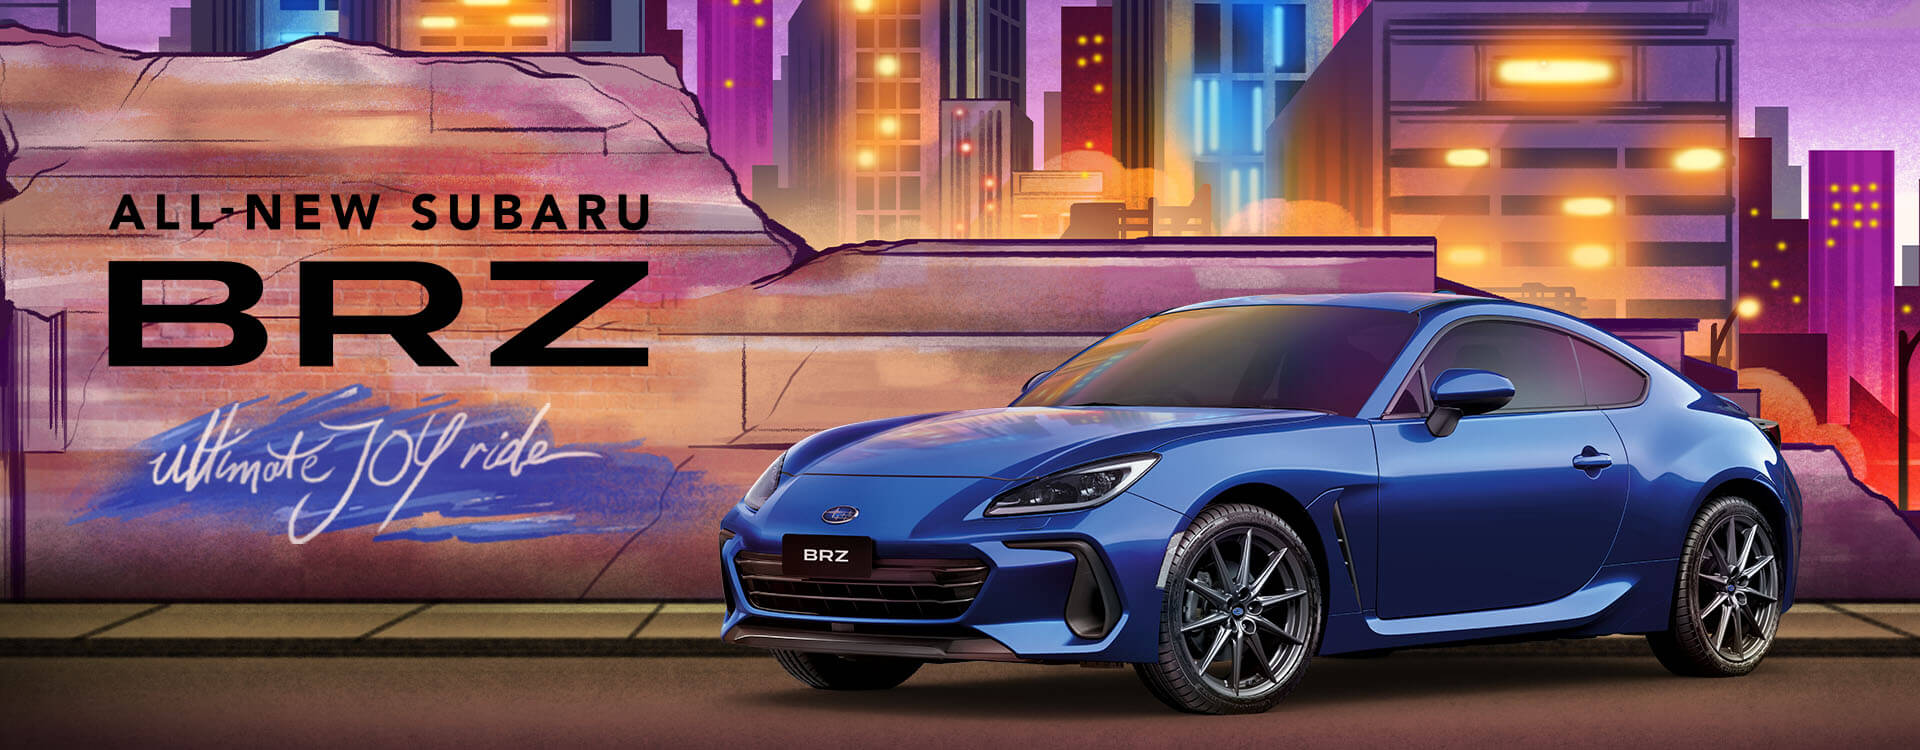 All-new Subaru BRZ Image